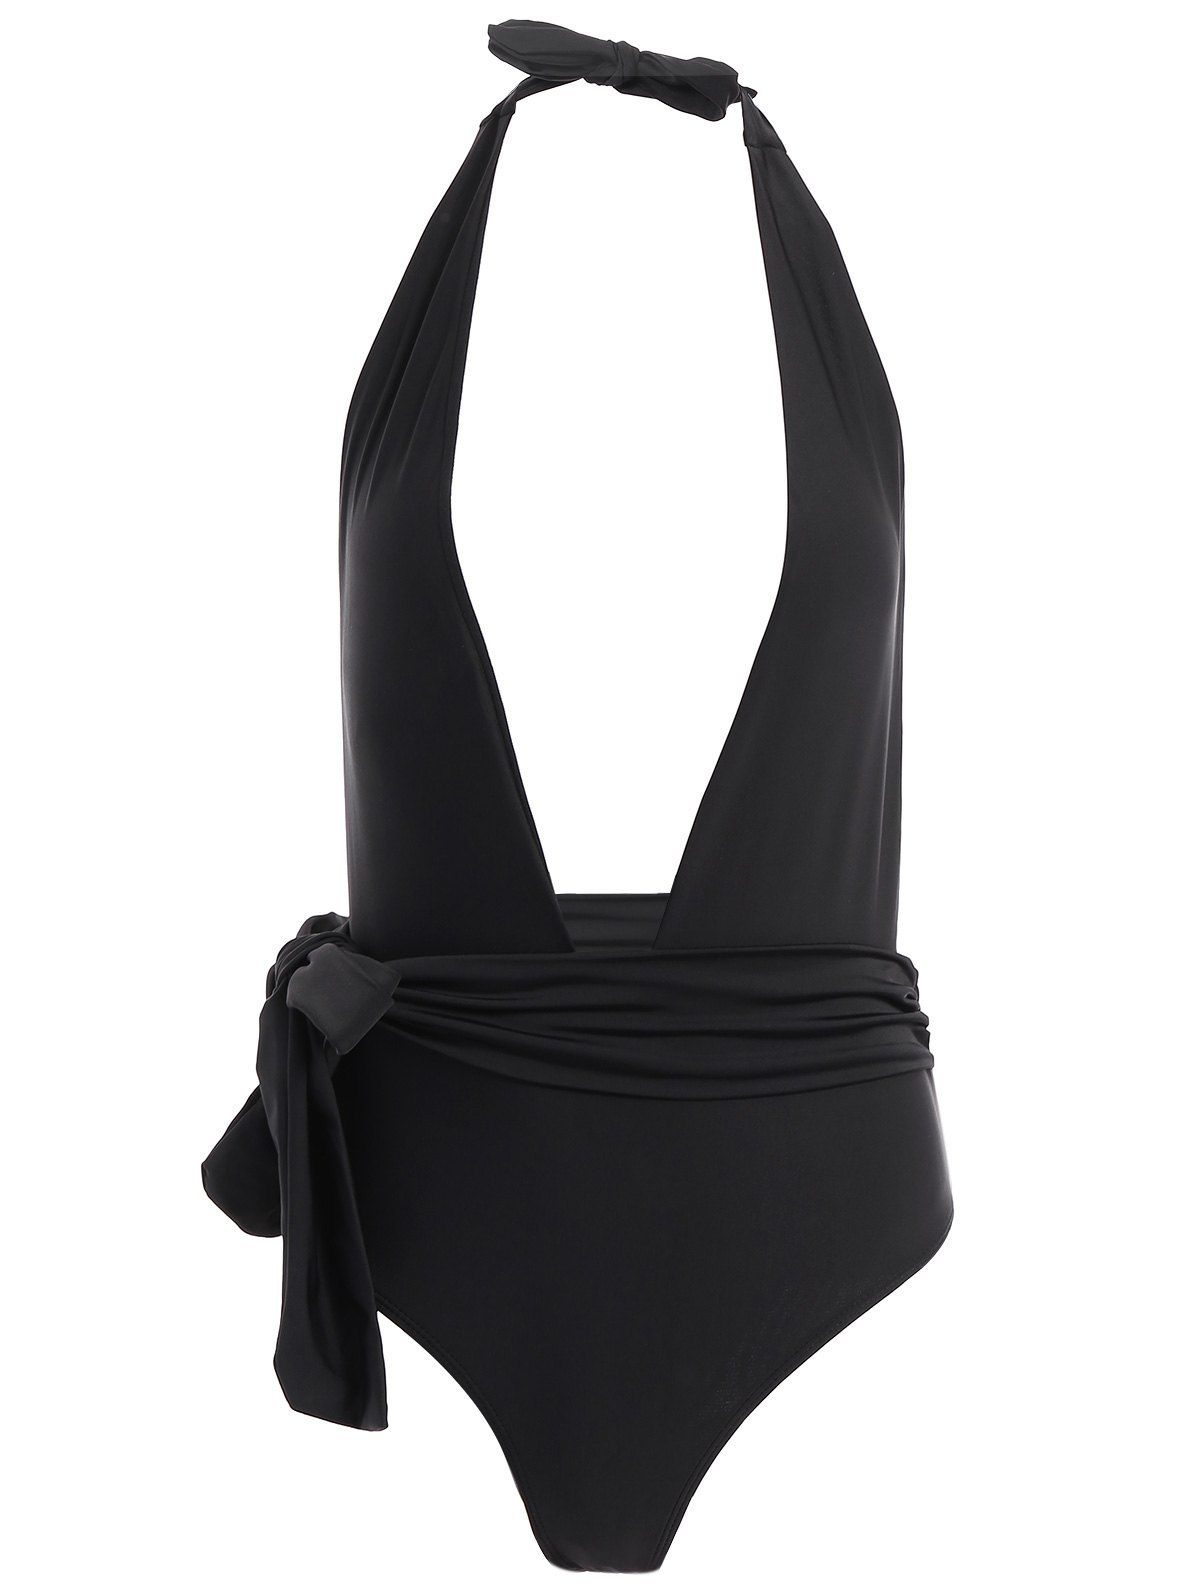 [41% OFF] 2021 Women's Plunging Neck Self-Tie Swimsuit In BLACK | DressLily